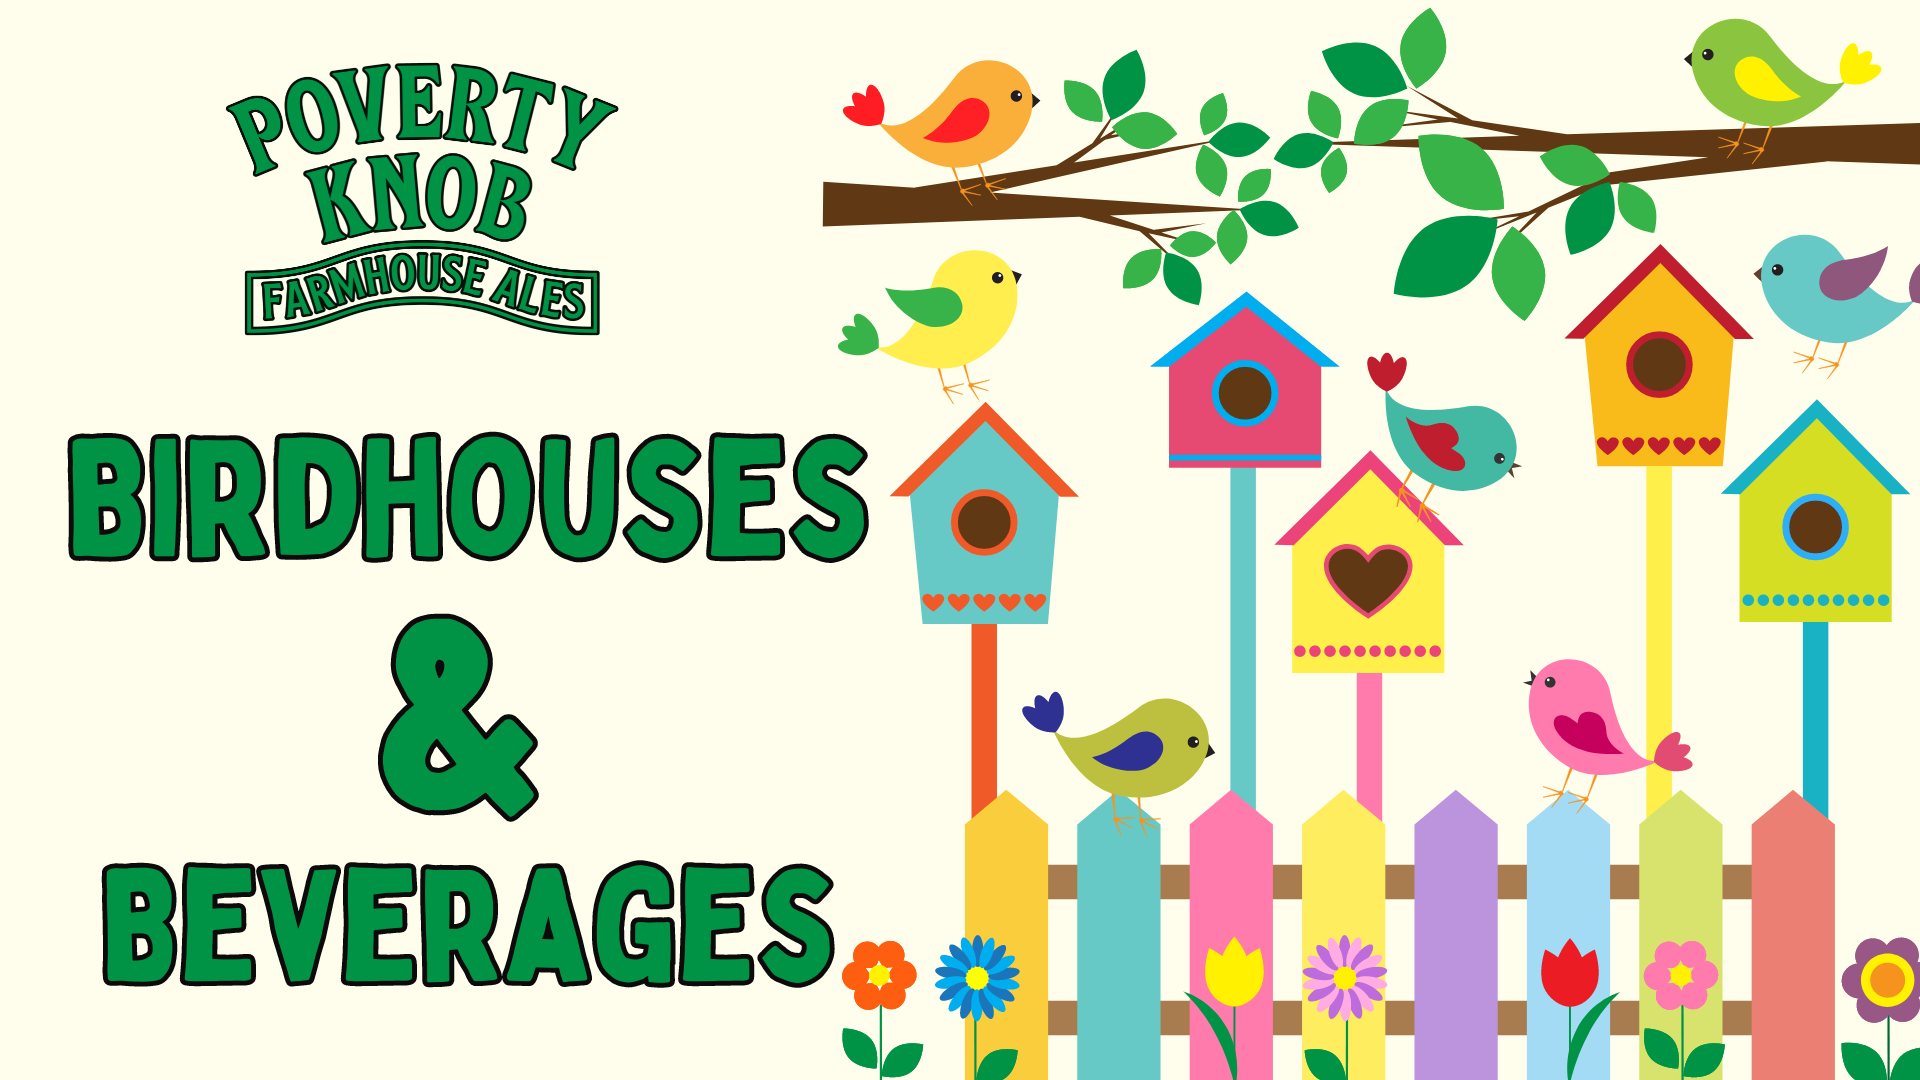 Birdhouses & Beverages at Poverty Knob